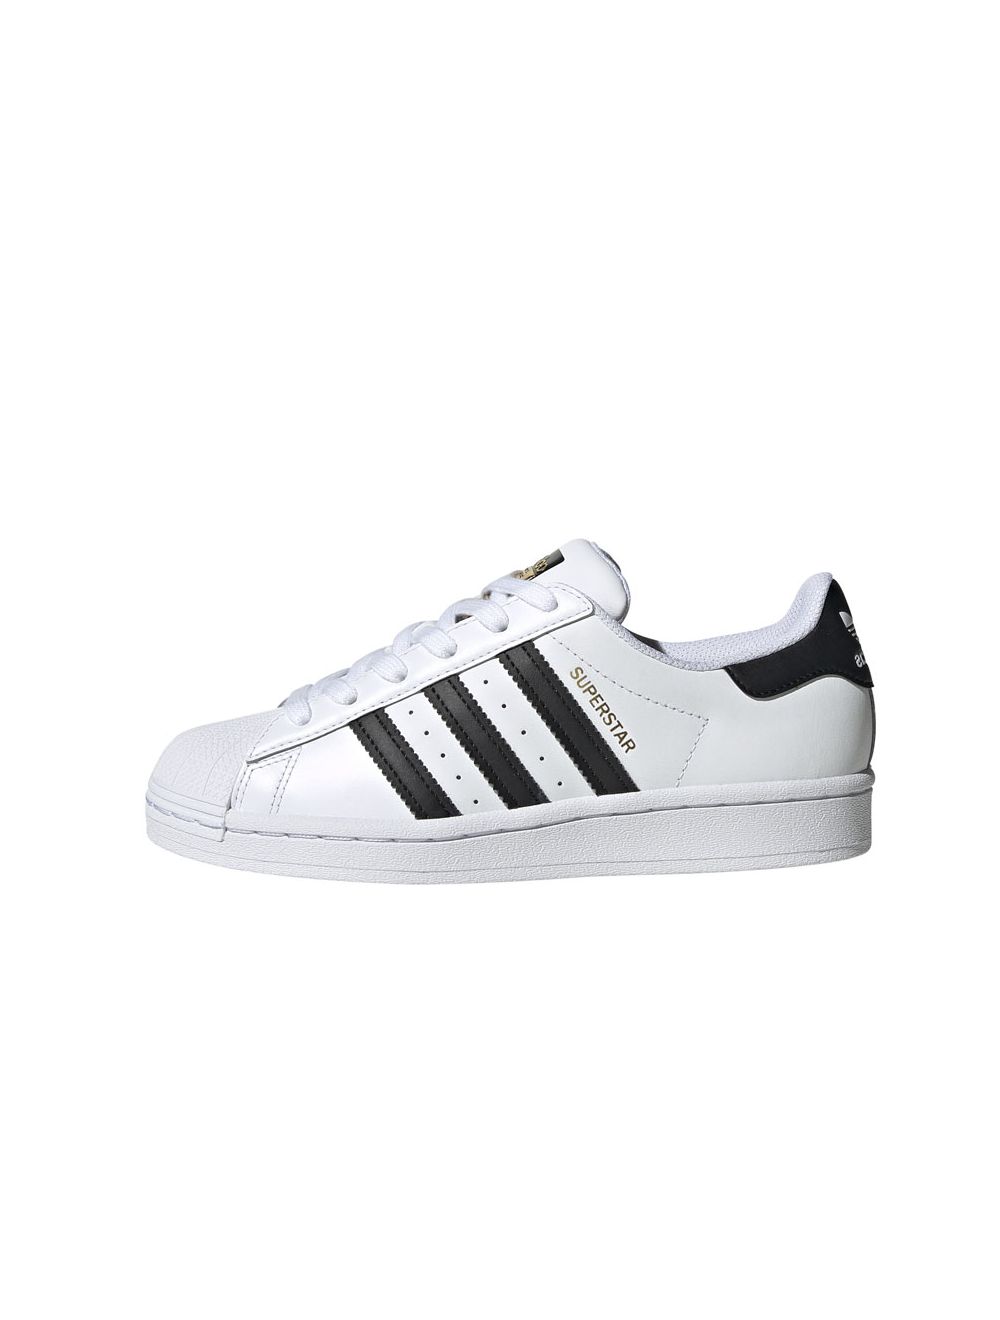 Shop adidas Originals Superstar Shoes Youth Shoes White/Black | S